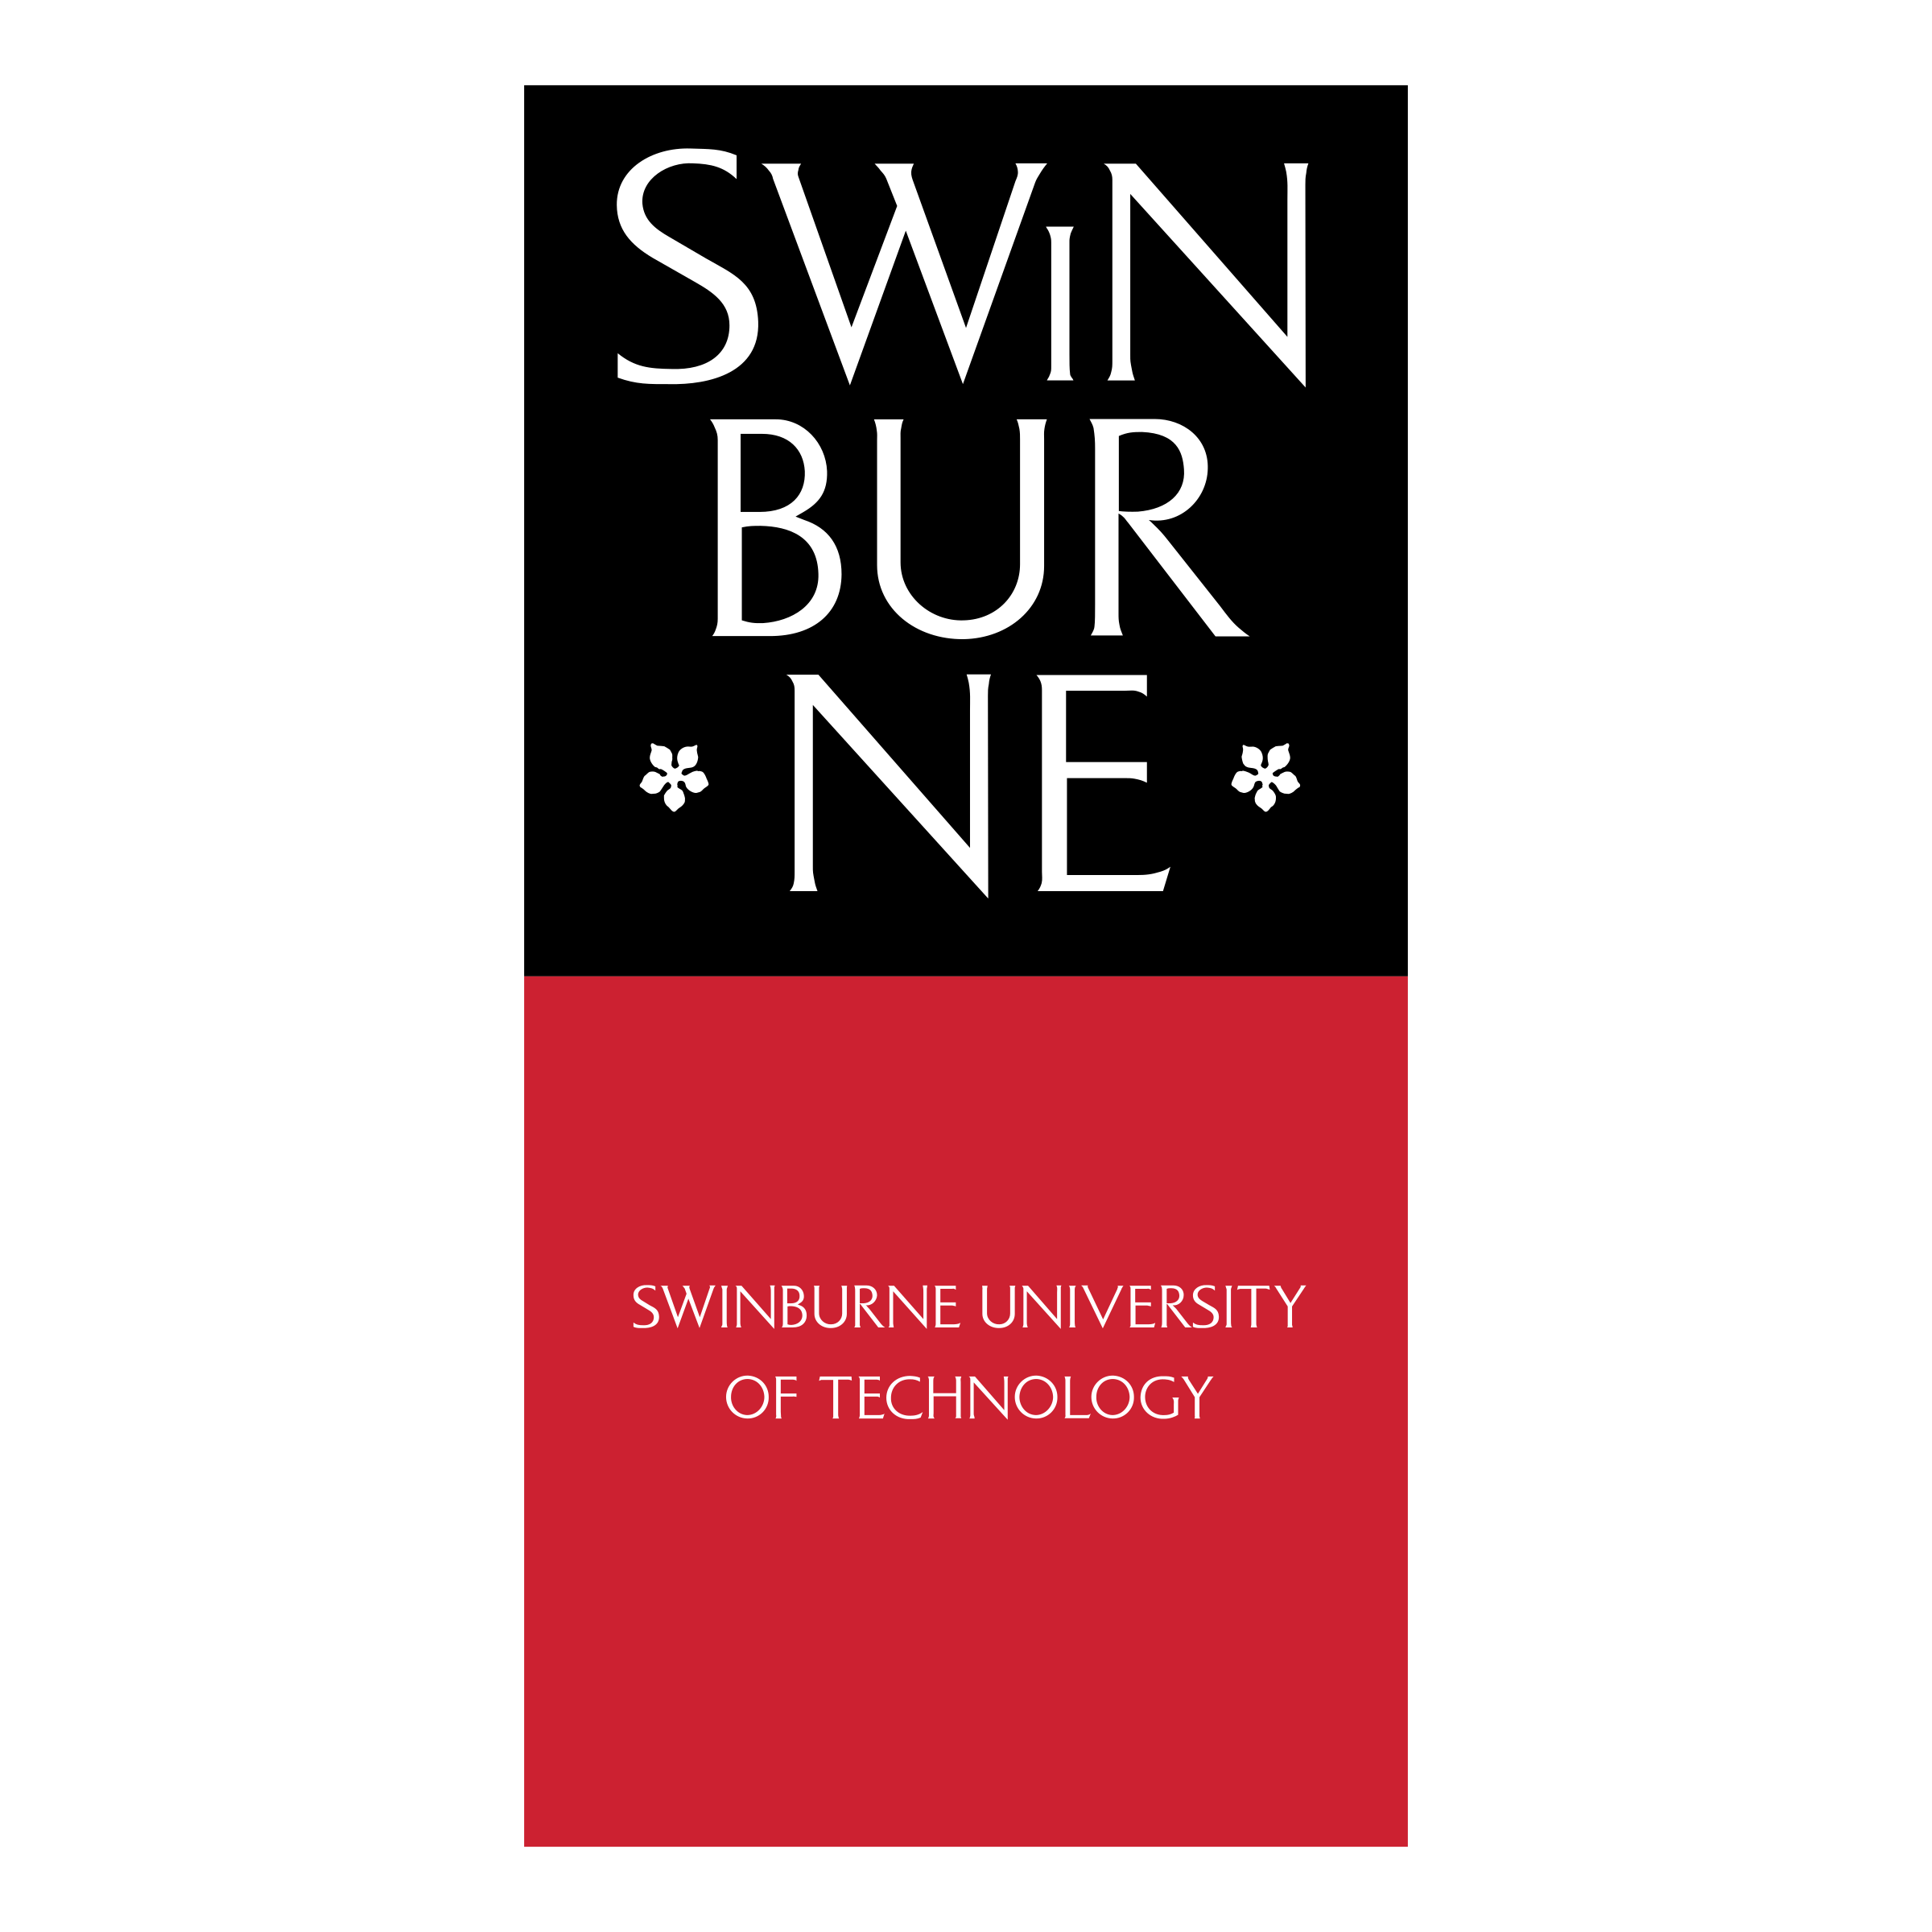 swinburne-university-of-technology-5-logo-png-transparent.png